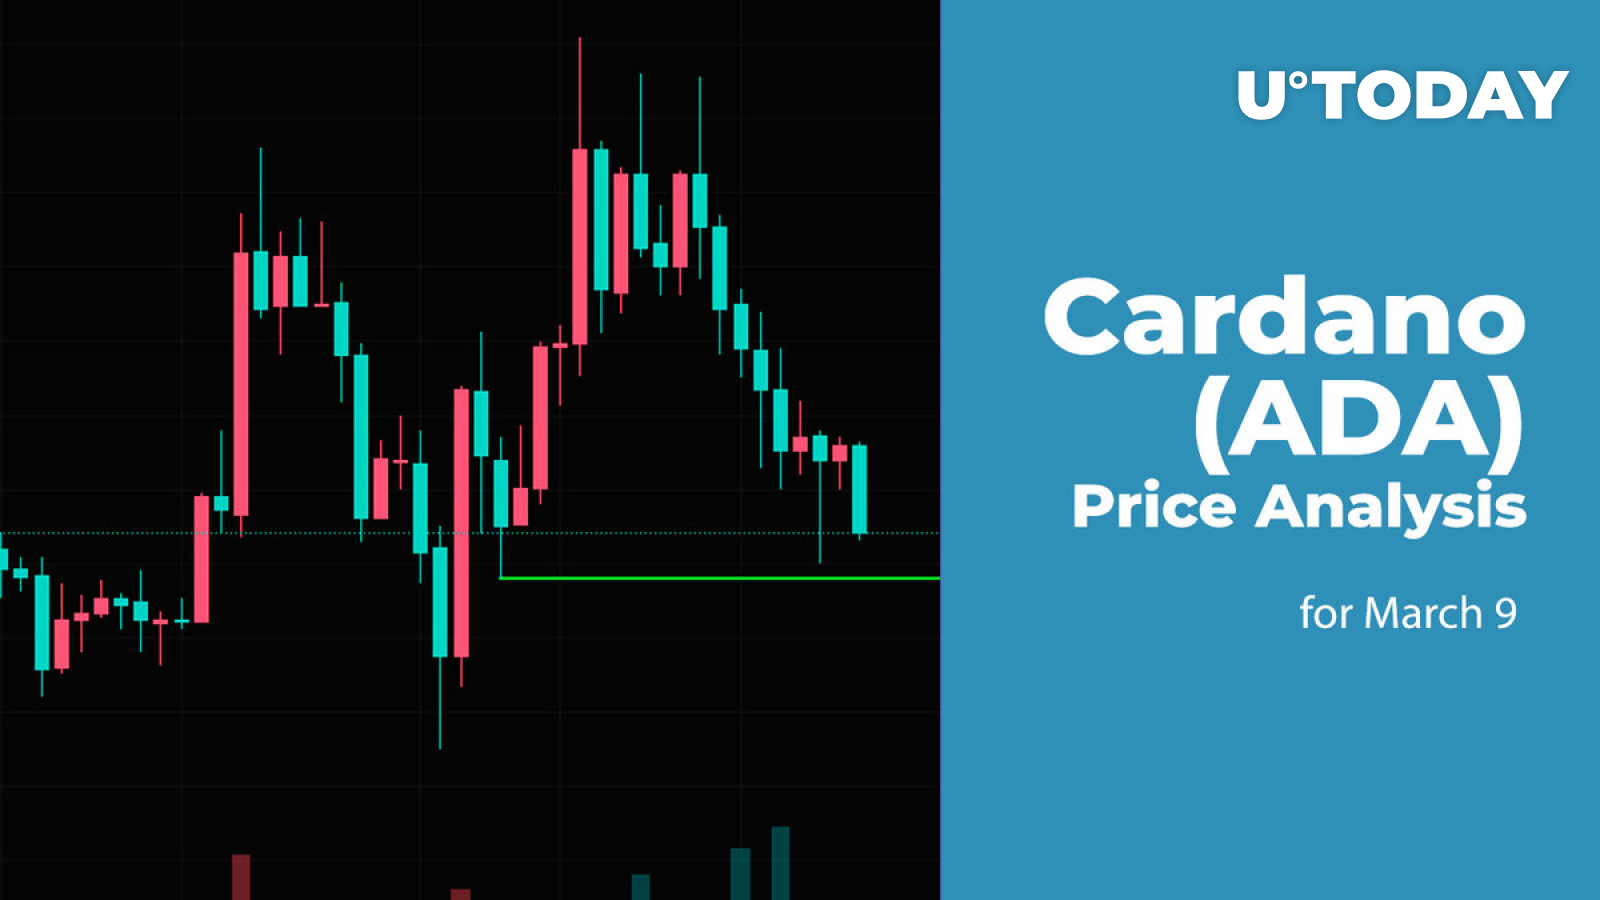 Cardano (ADA) Price Analysis for March 9 - BitcoinEthereumNews.com